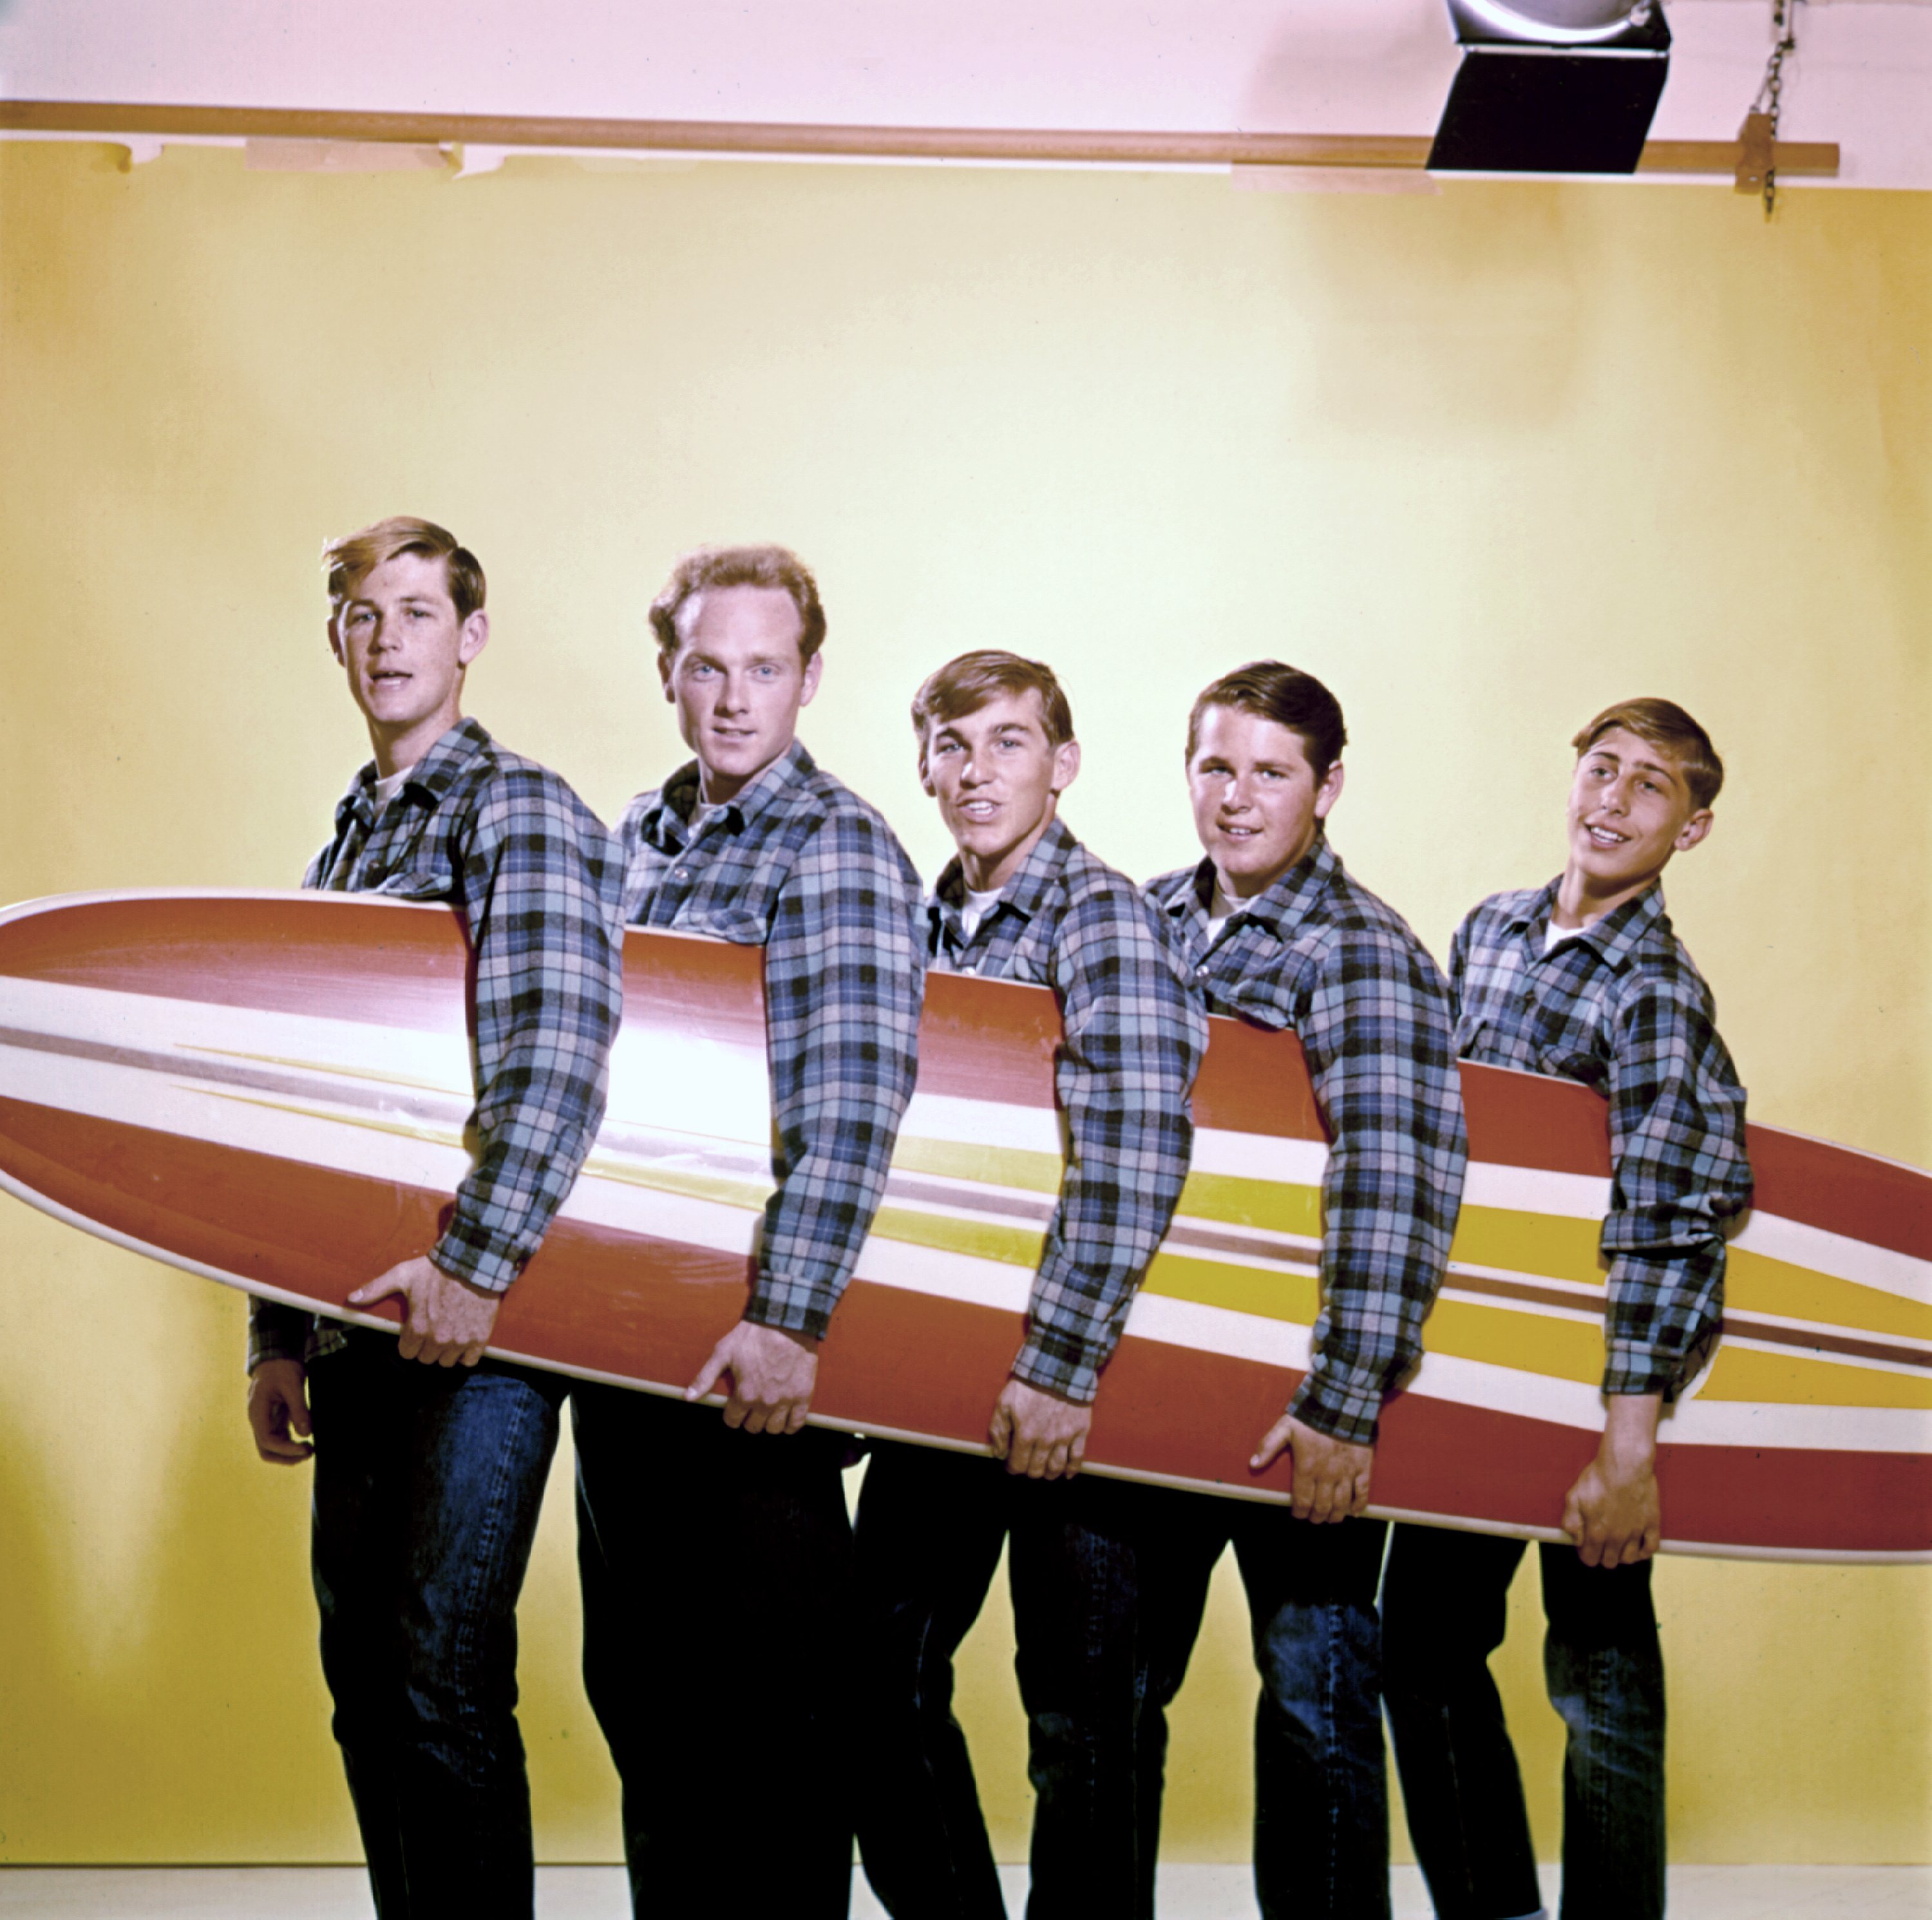 Rock and roll band The Beach Boys pose for a portrait (Brian Wilson, Mike Love, Dennis Wilson, Carl Wilson, David Marks)